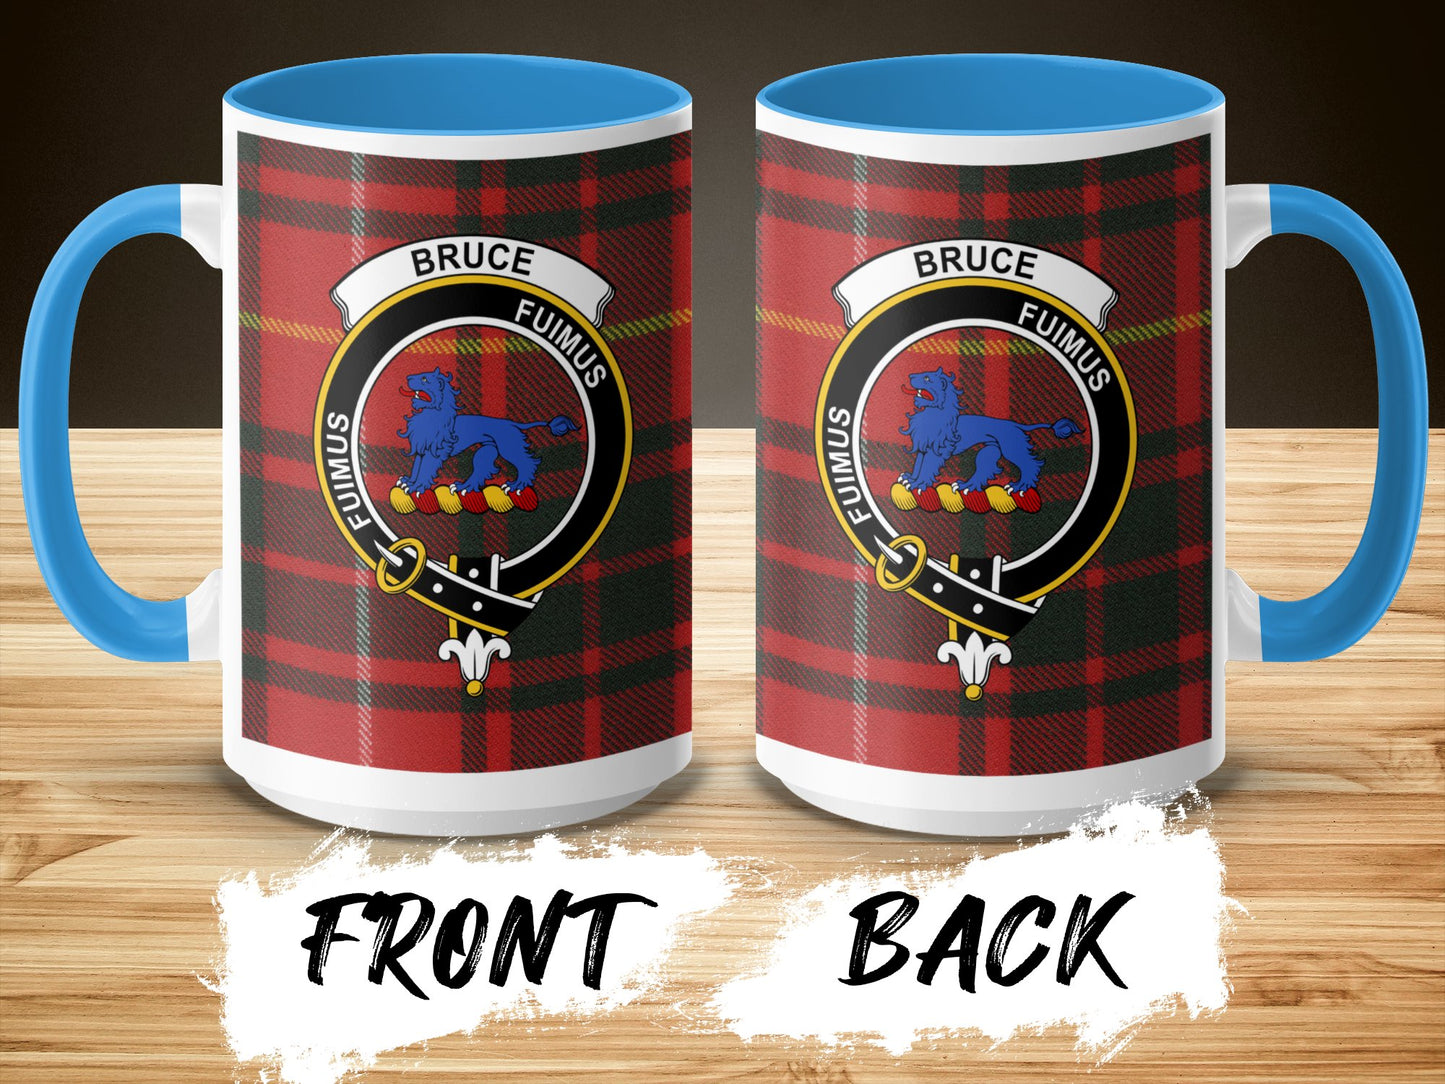 Scottish Red Plaid Bruce Clan Fumos Family Crest Mug - Living Stone Gifts